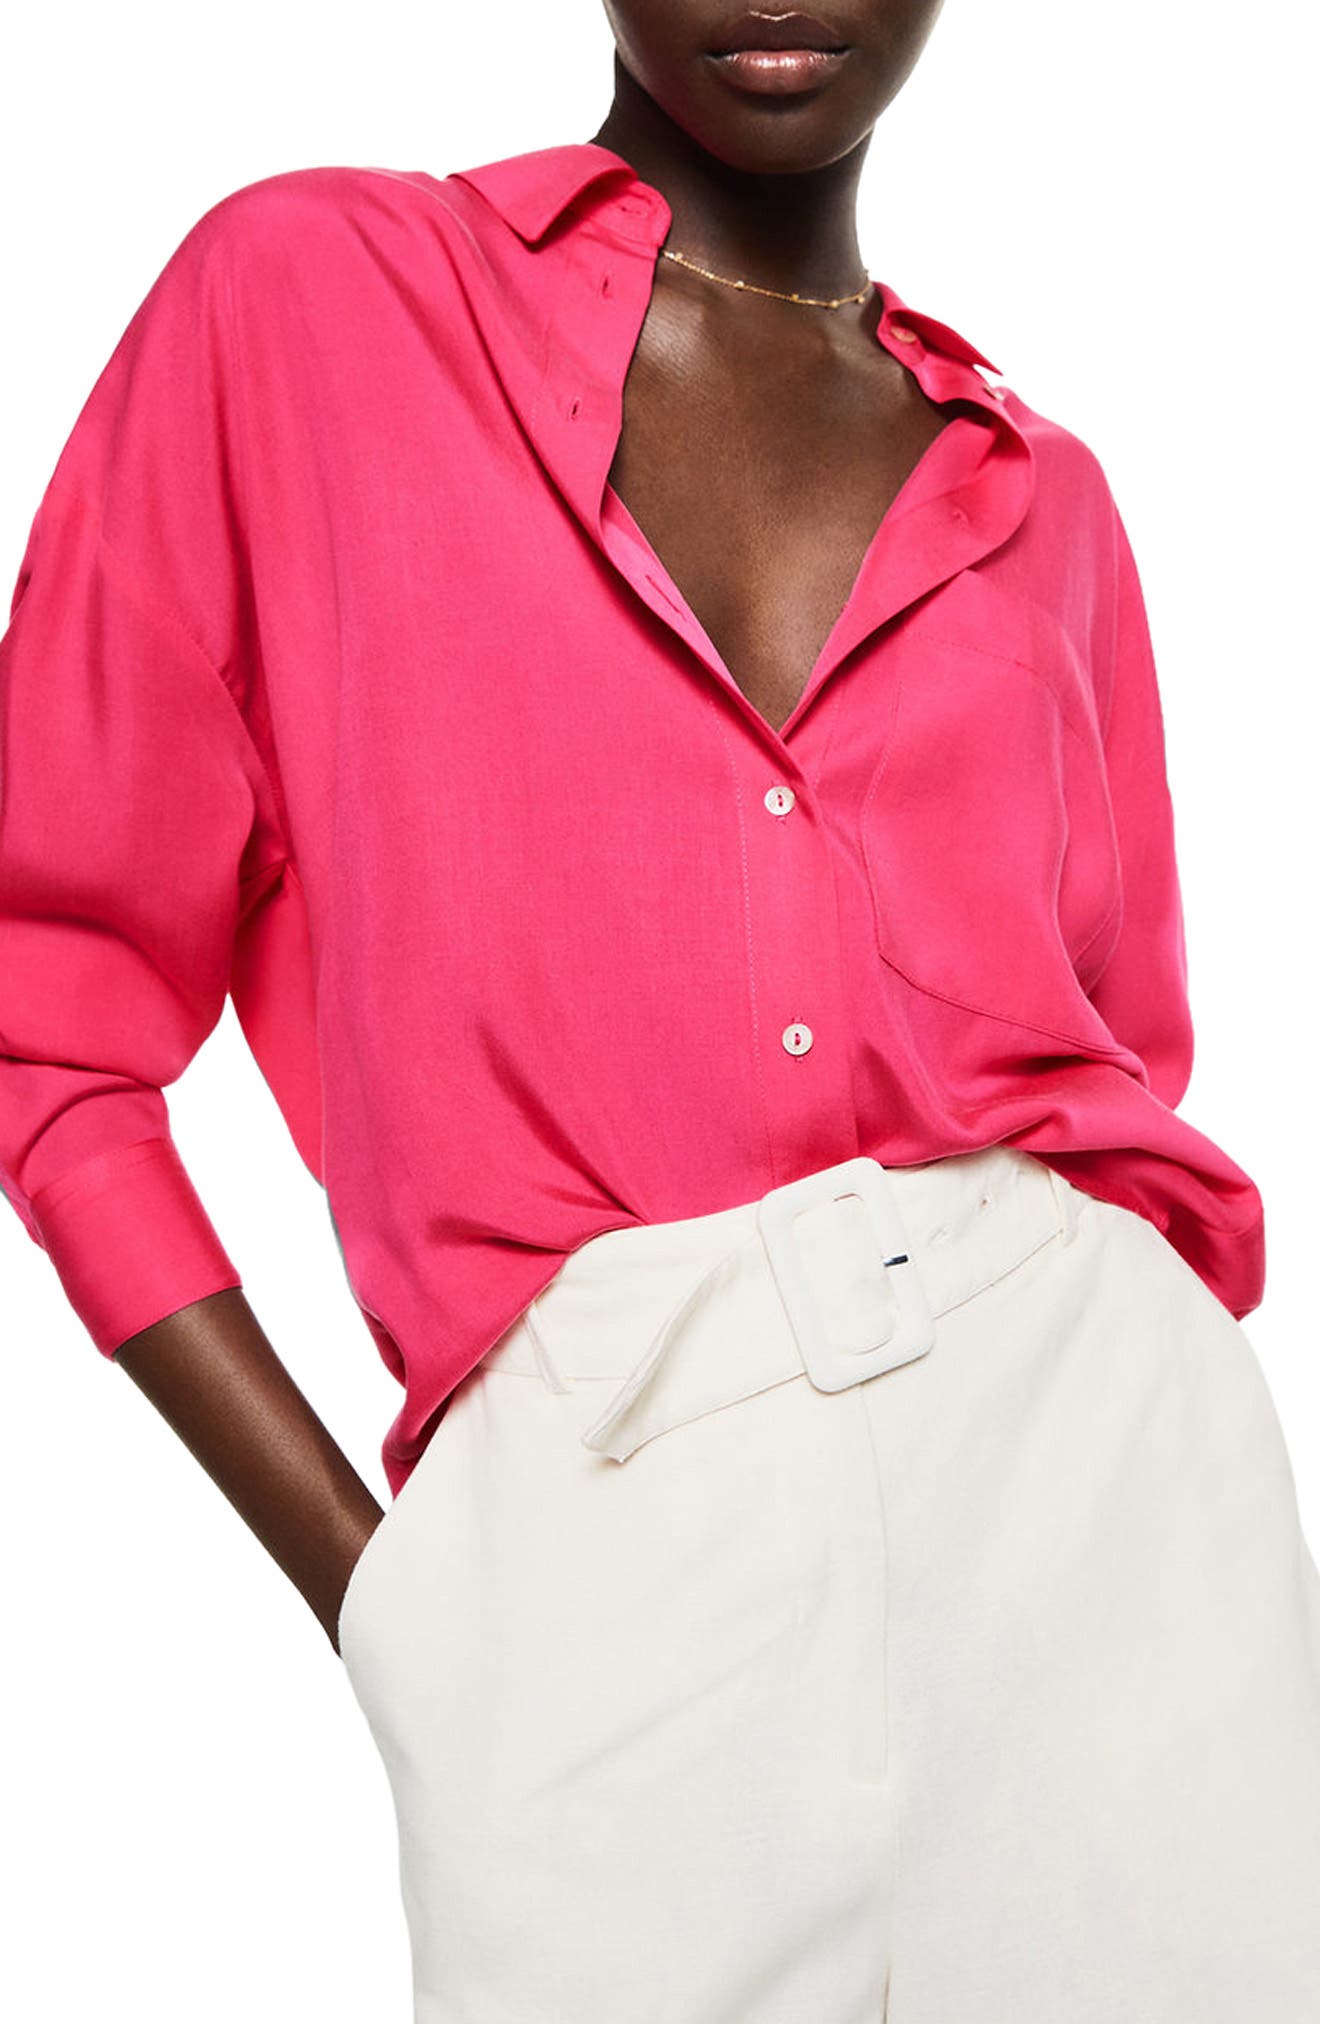 WOMEN FASHION Shirts & T-shirts Blouse Flowing Mango blouse discount 74% Green L 